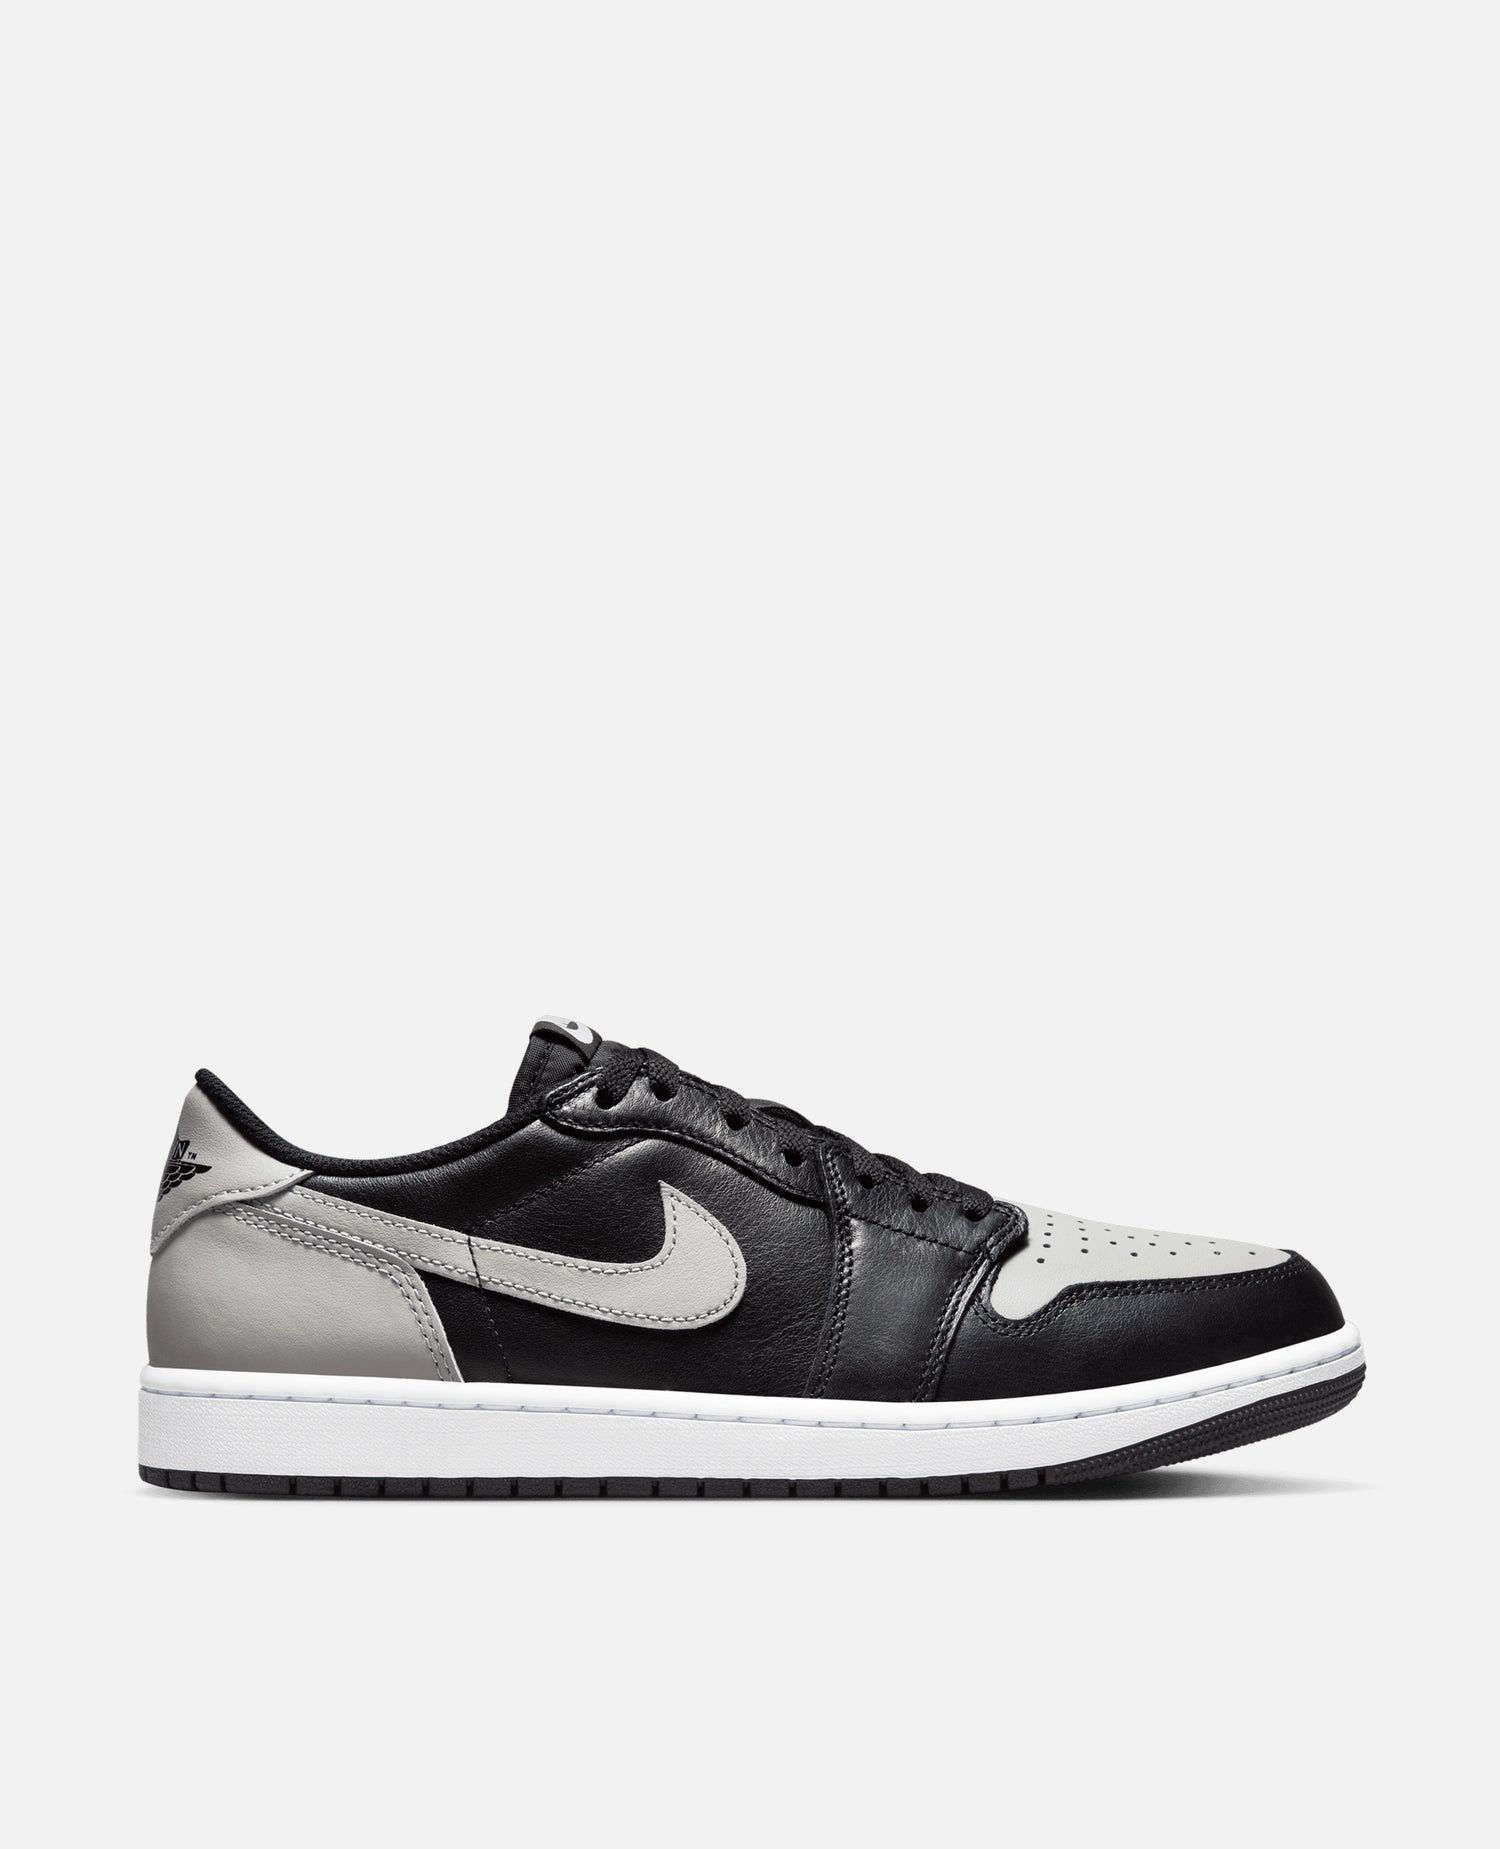 Nike Air Jordan 1 Low OG (Black/Medium Grey-Whit)